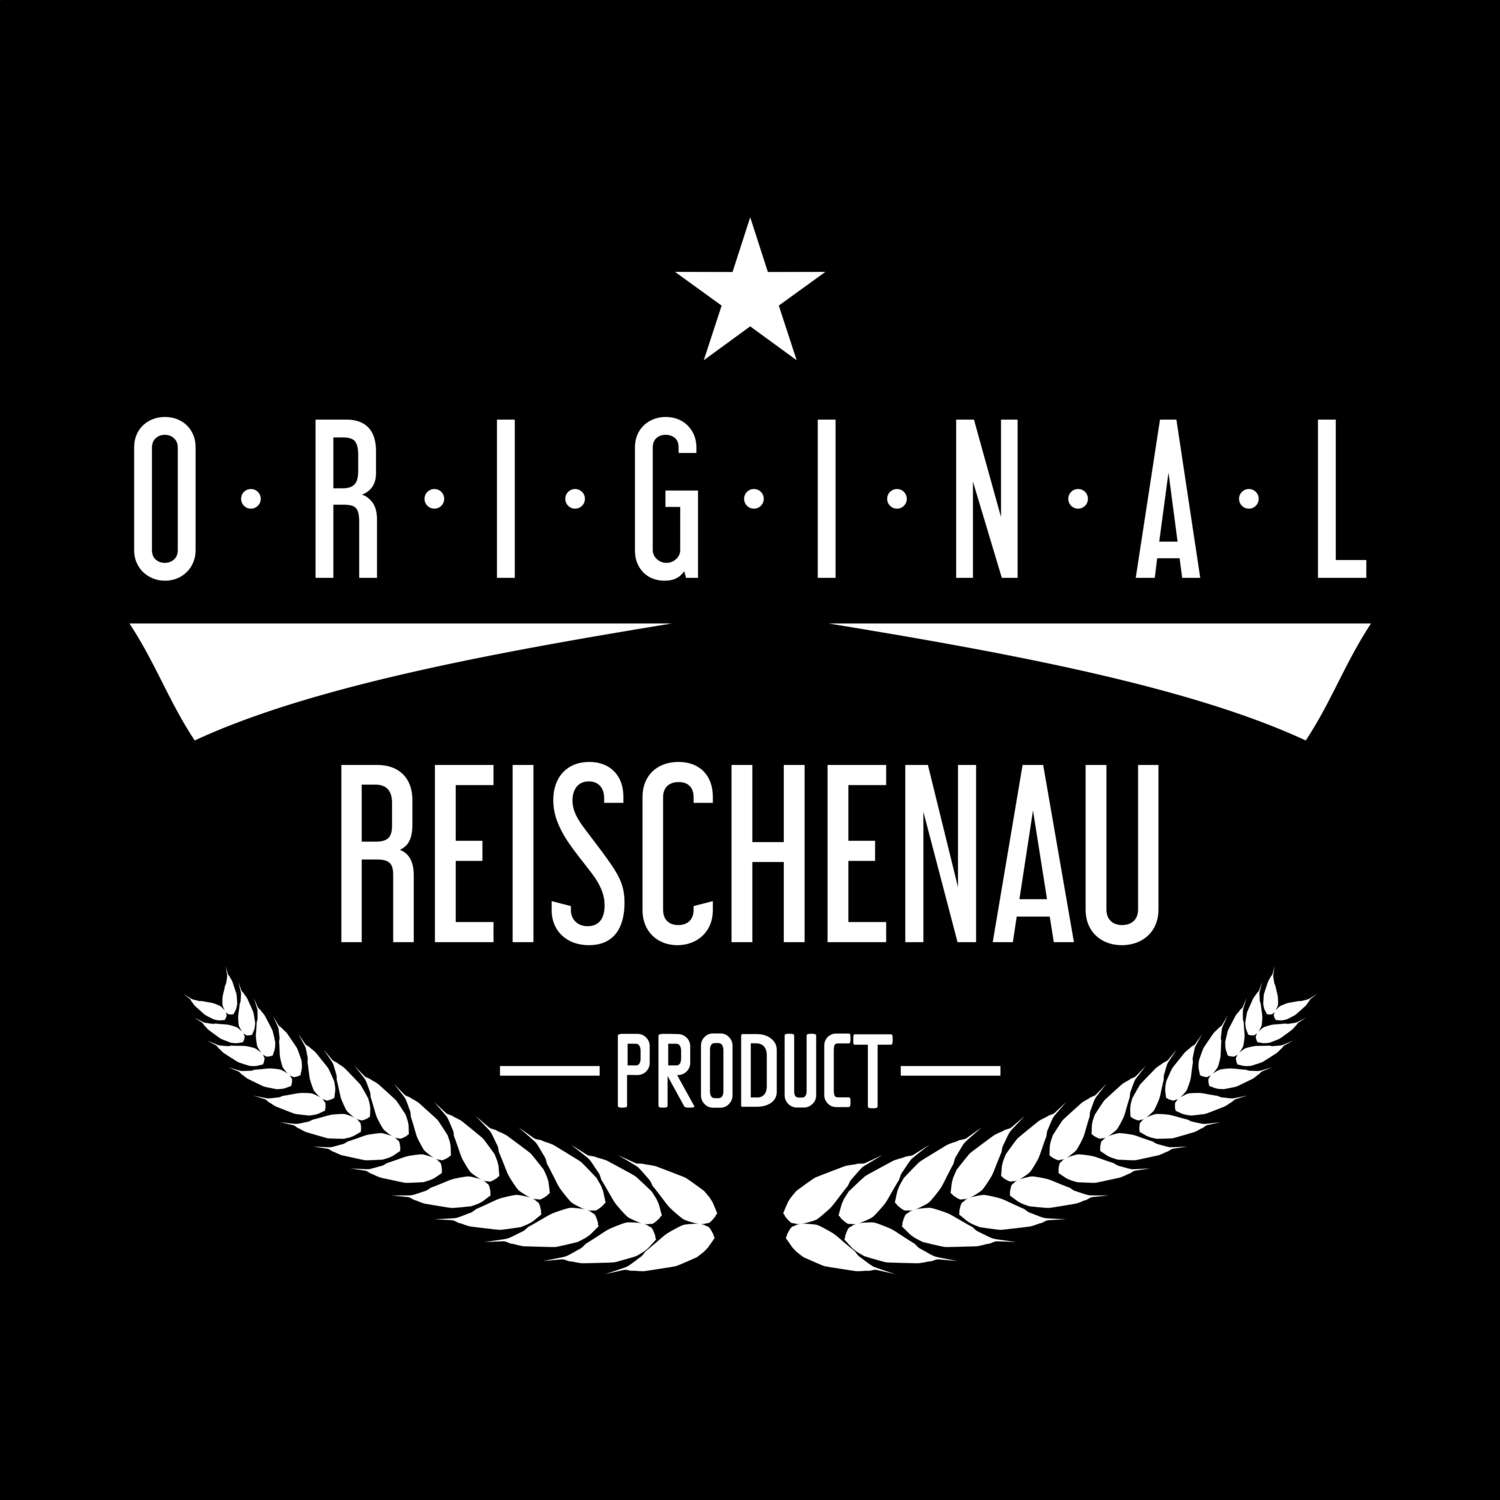 Reischenau T-Shirt »Original Product«